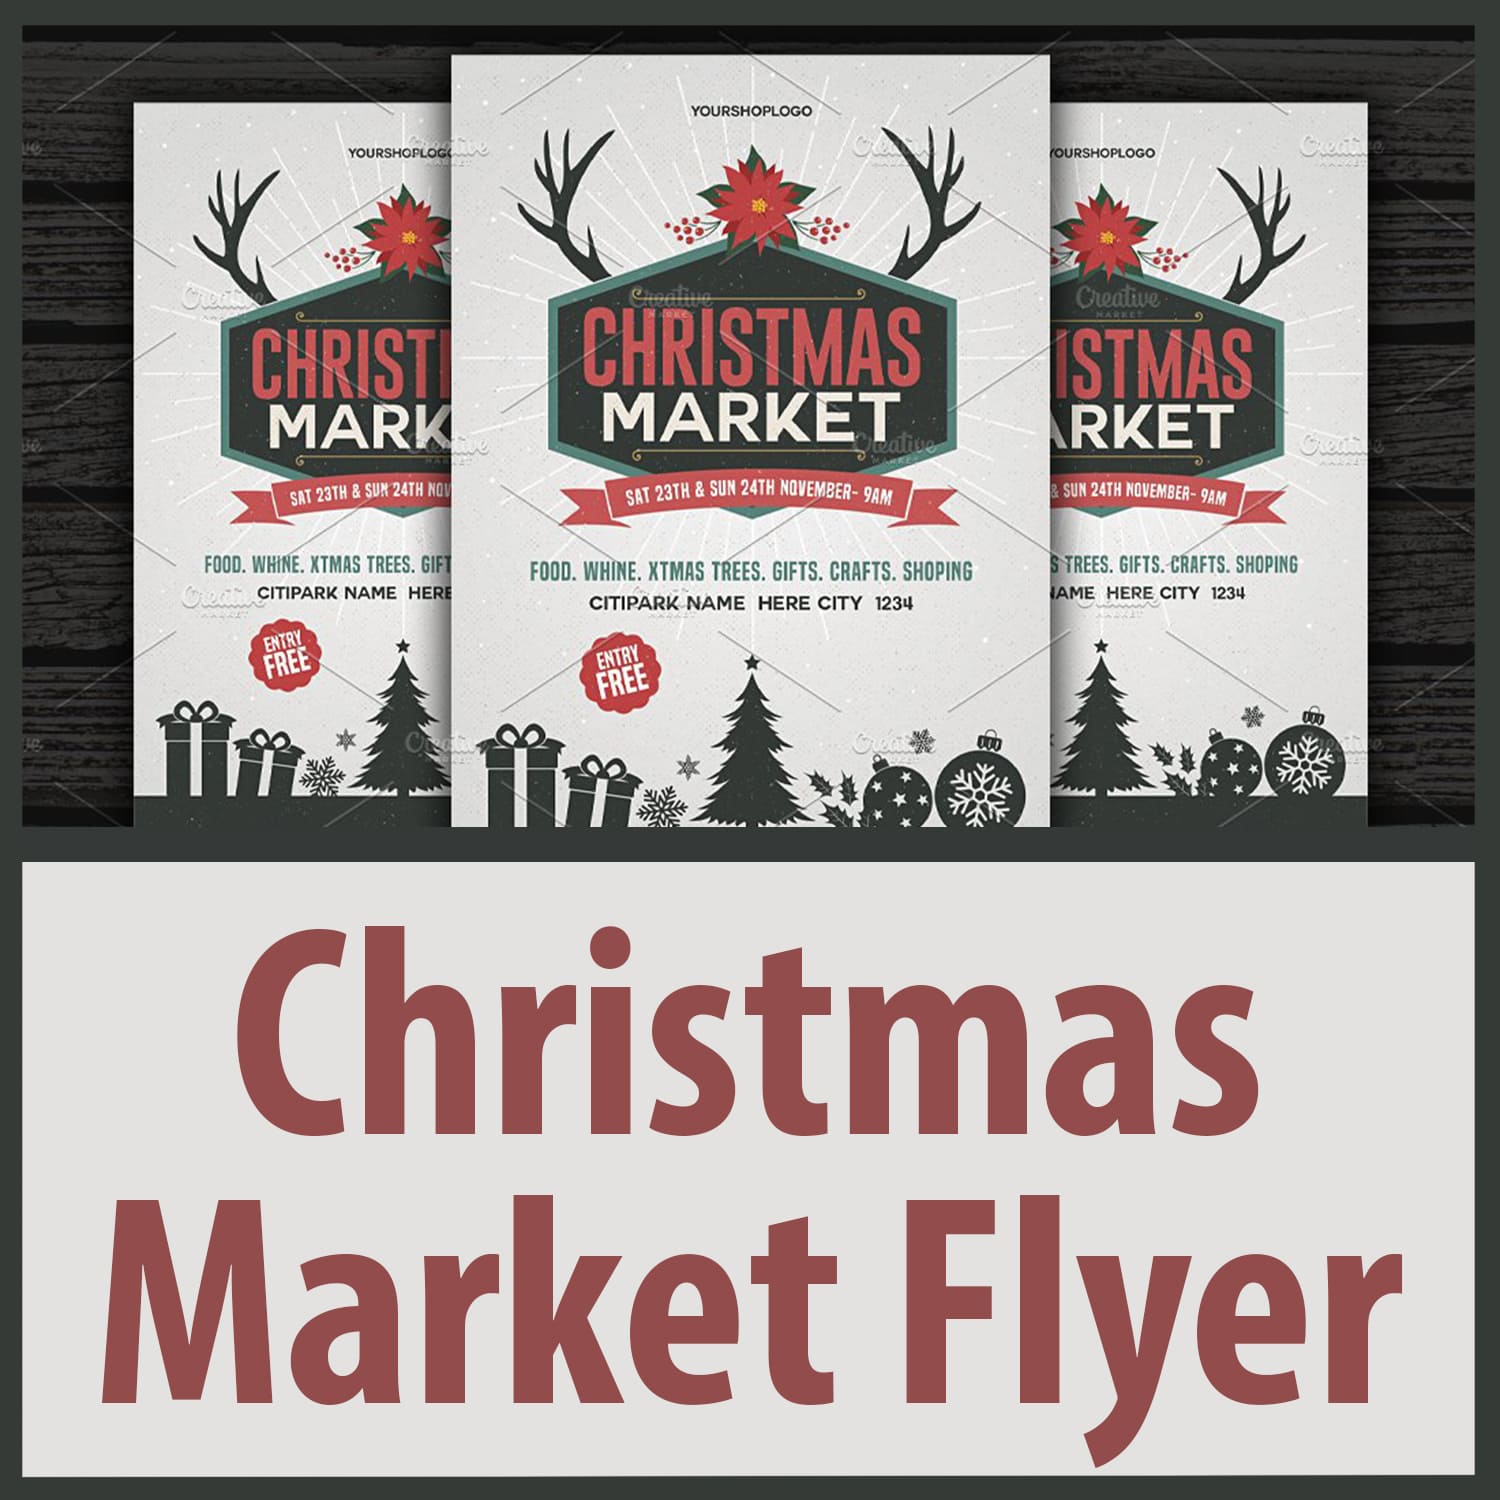 Christmas Market Flyer main cover.